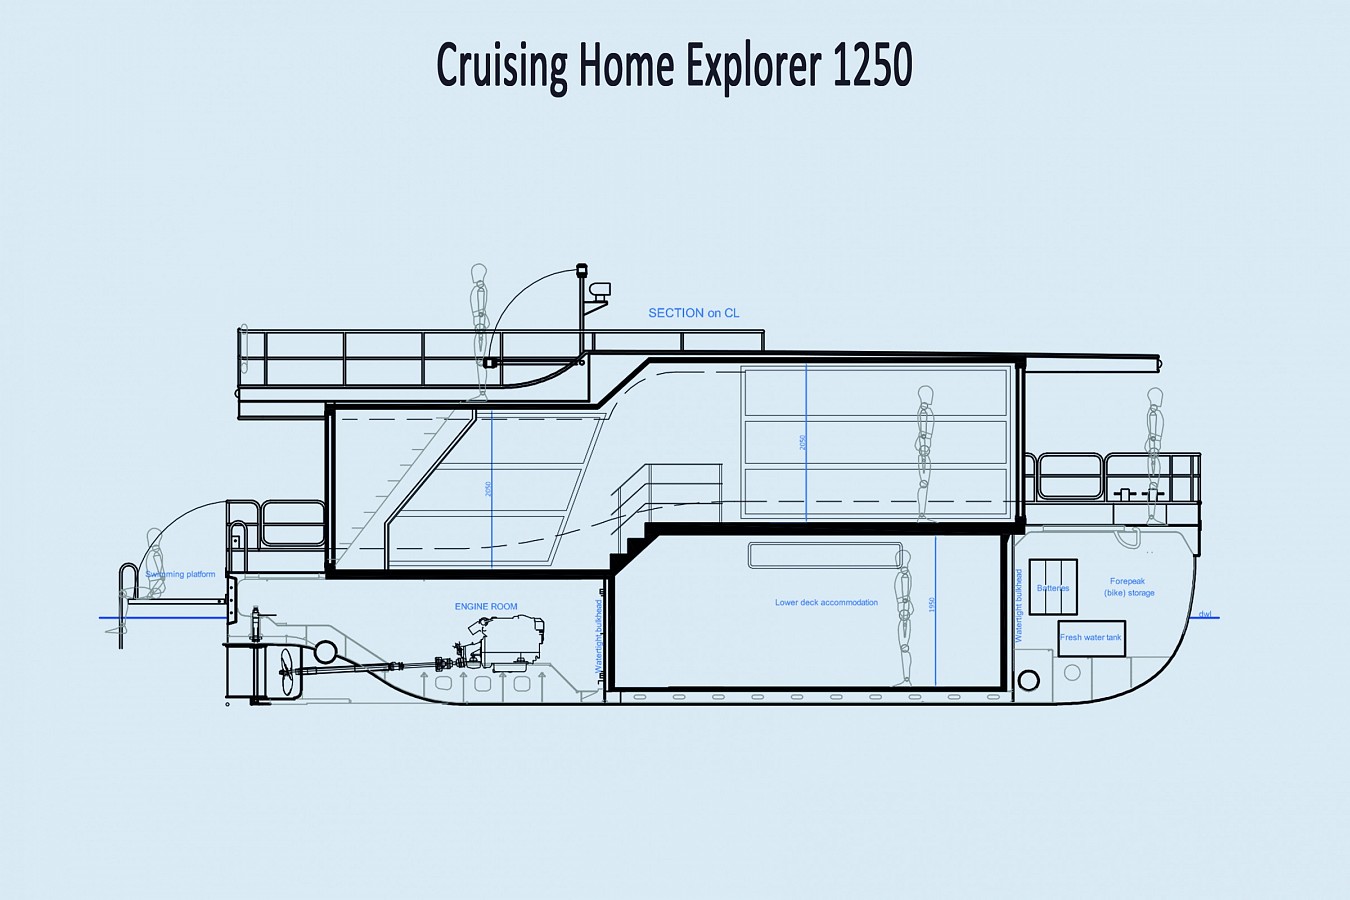 Cruising Home explorer 1250